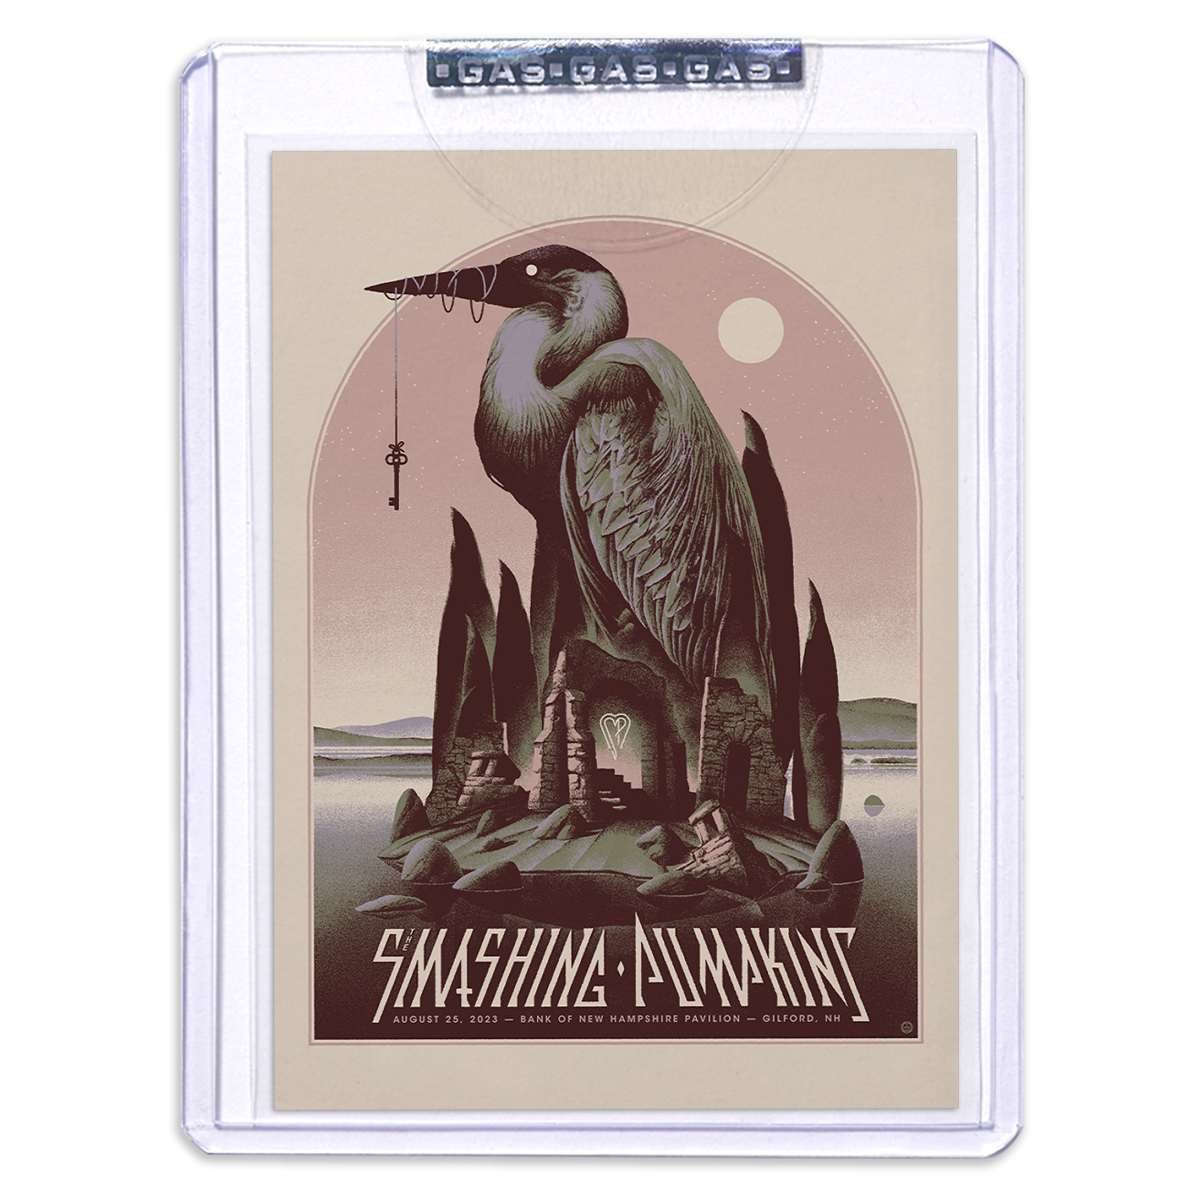 The Smashing Pumpkins Gilford August 26, 2023 Poster & Setlist Trading Card